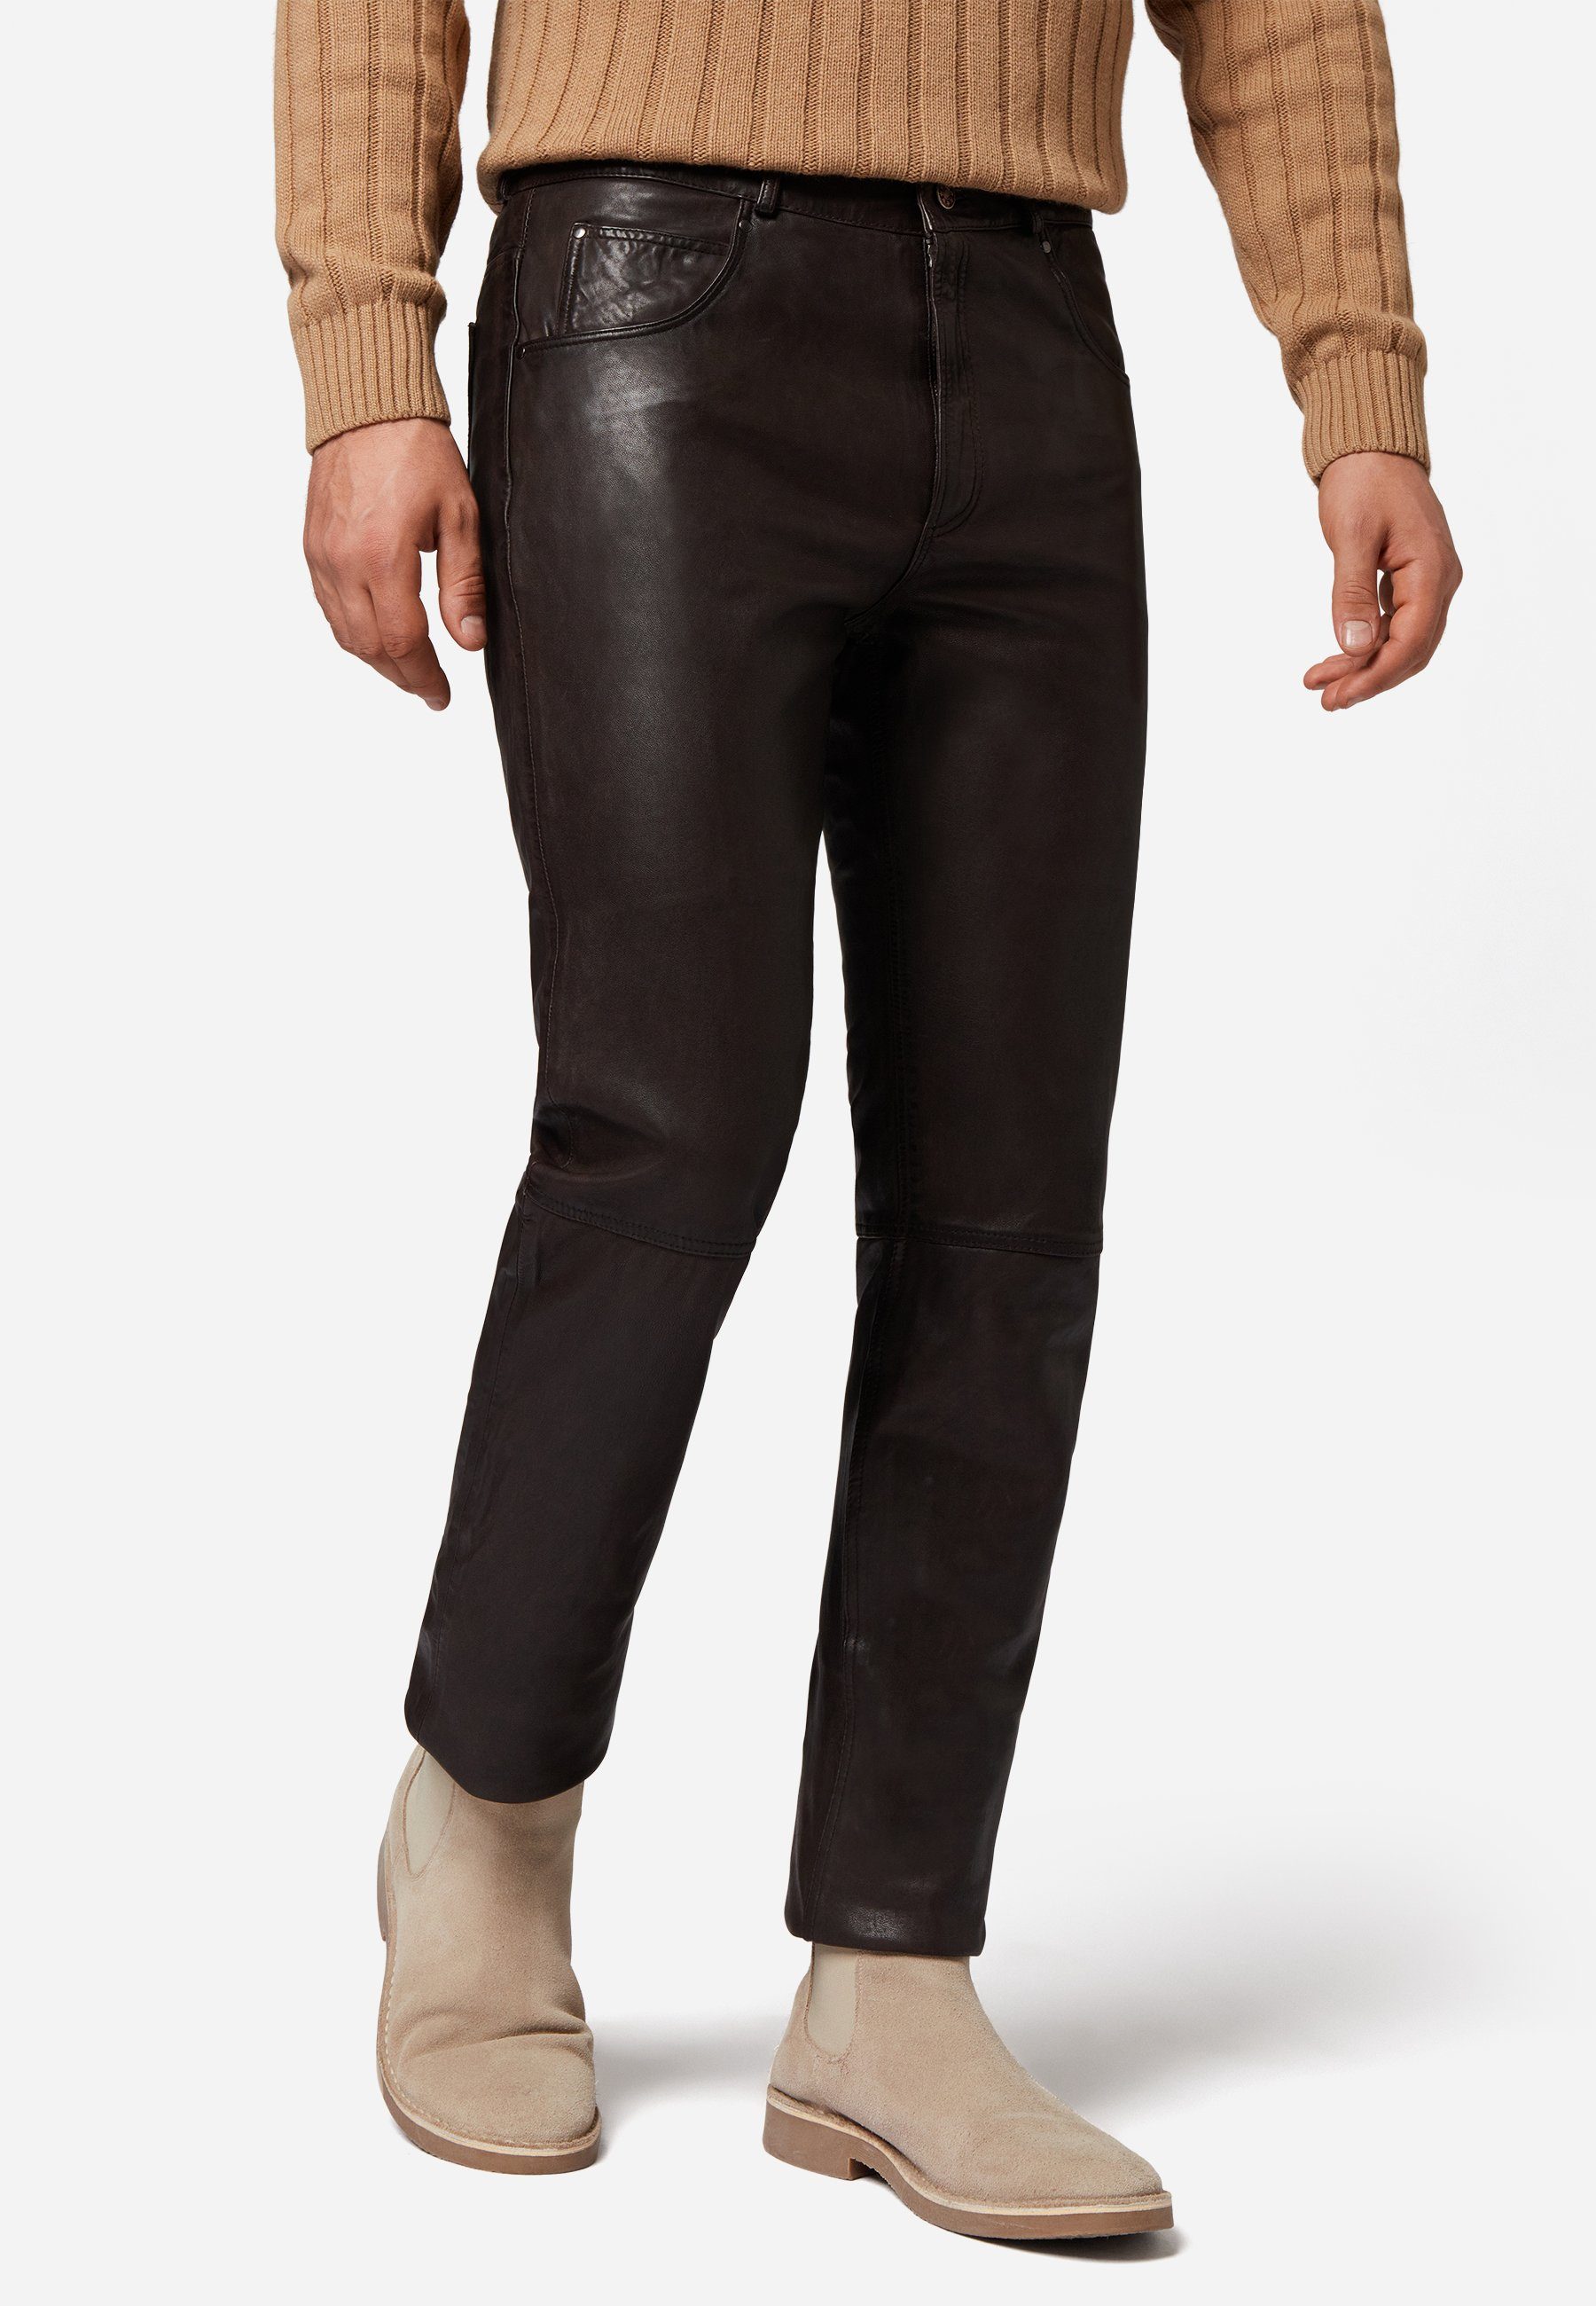 RICANO Lederhose Trant Pant Hochwertiges Lamm-Nappa Leder; 5-Pocket Jeans-Optik Braun